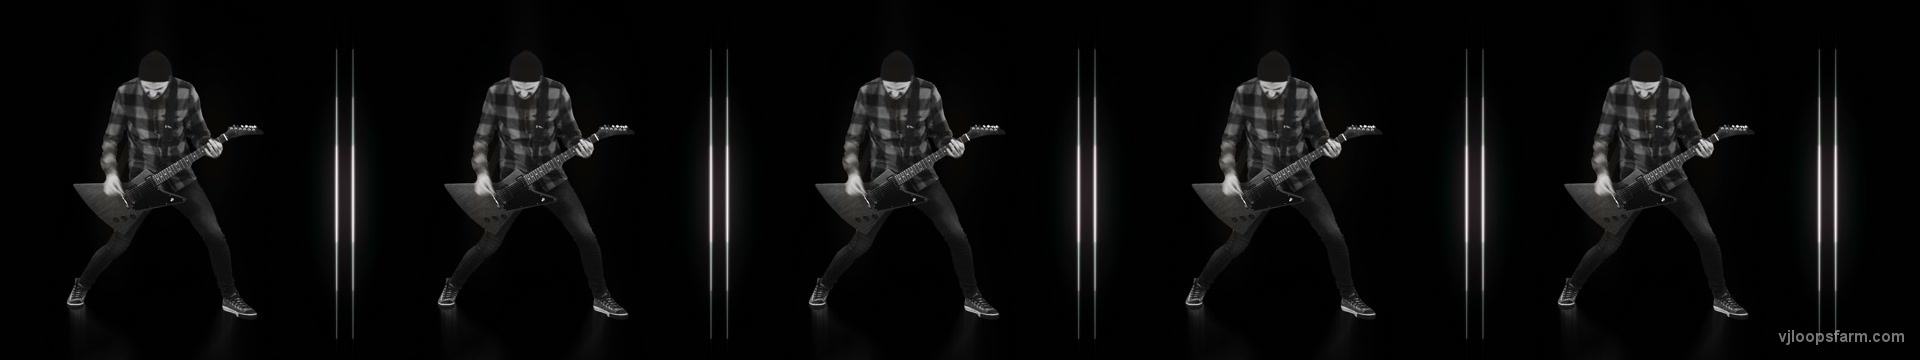 Ultra wide tripple head Rock Man Guitarist strobing visuals Video ARt VJ Footage